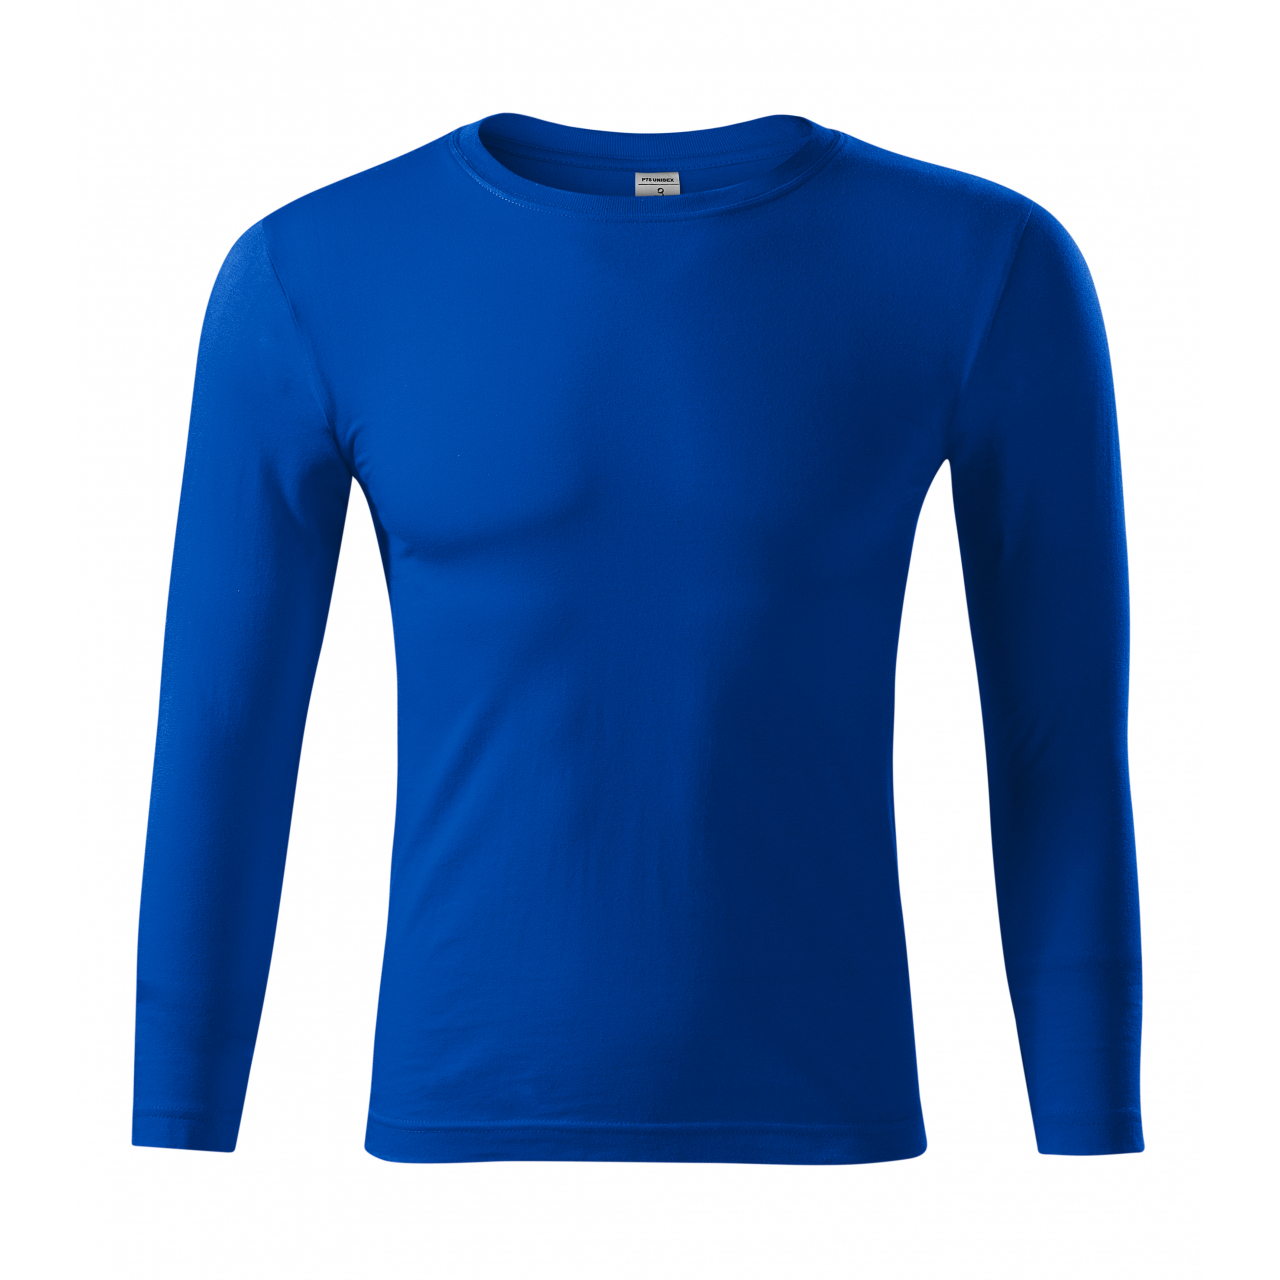 Tričko unisex Piccolio Progress LS - modré, XL